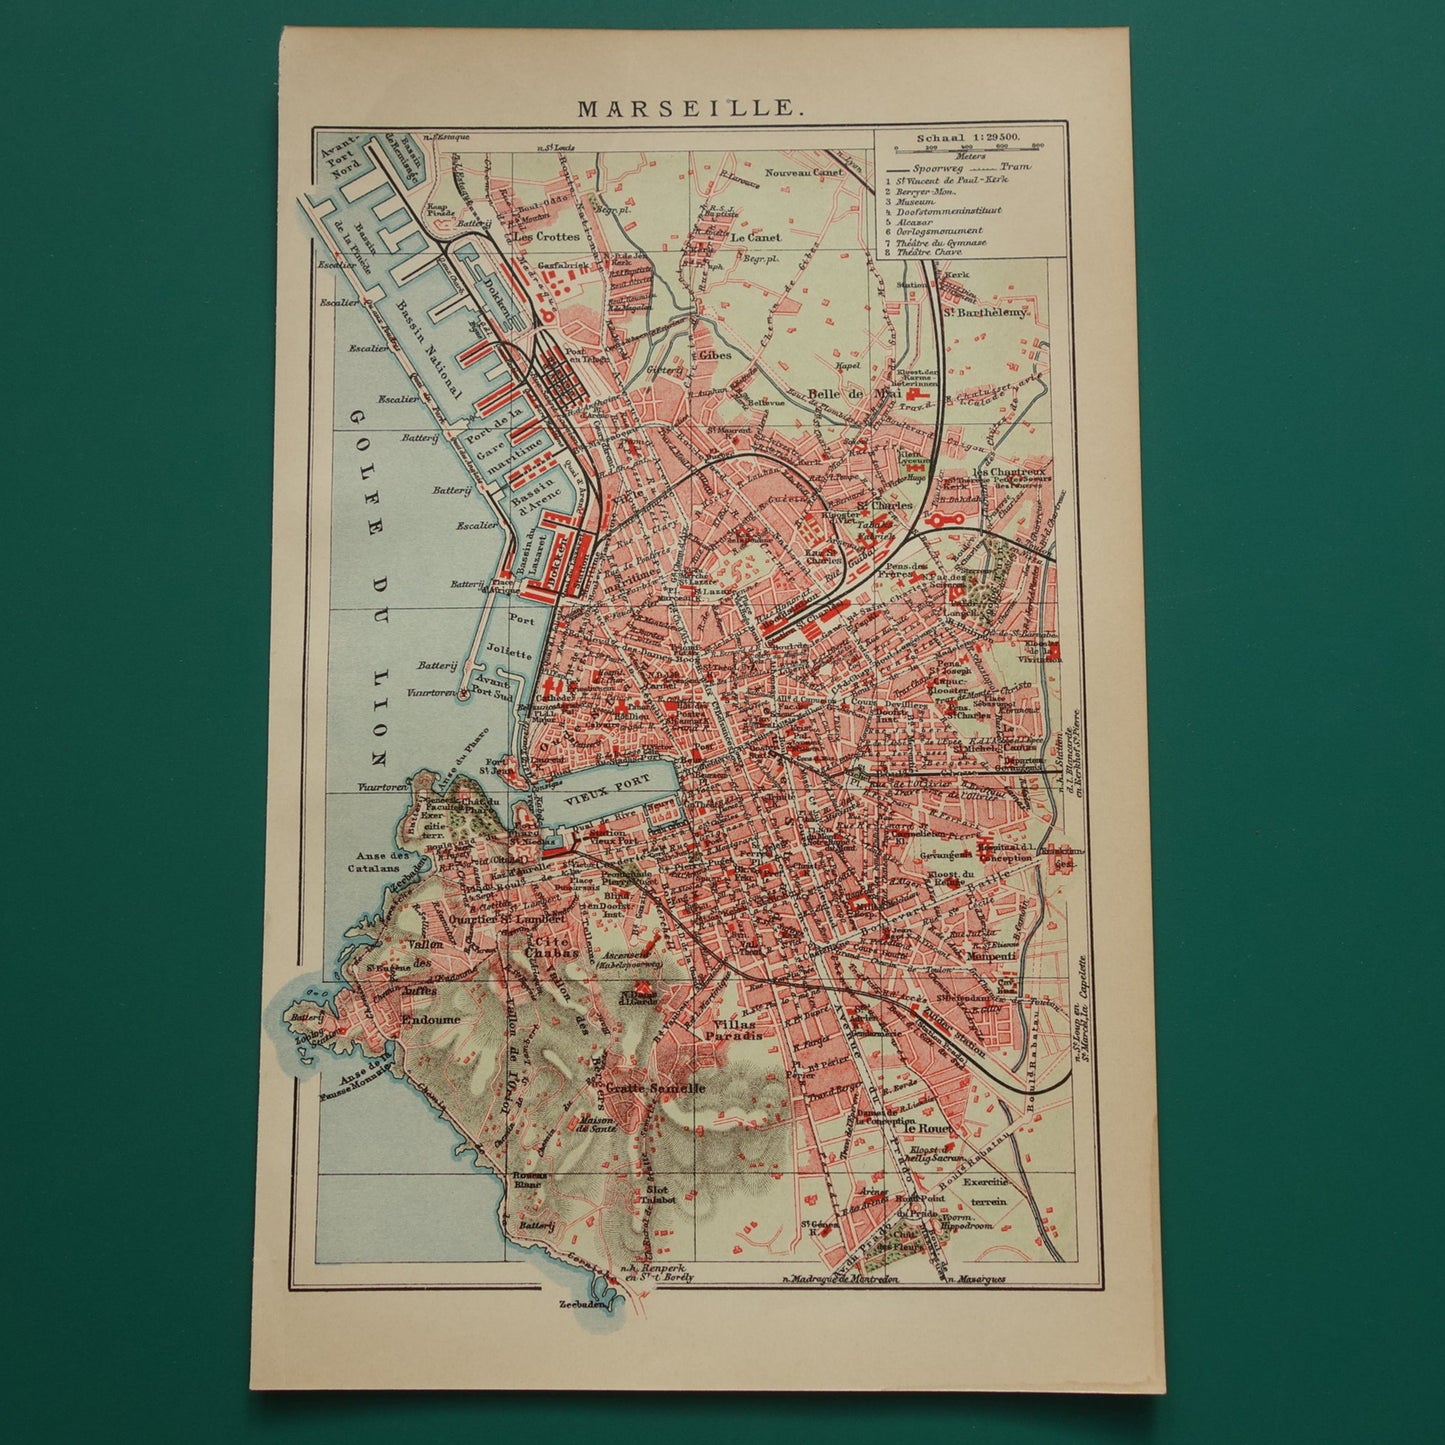 MARSEILLE oude kaart van Marseille Frankrijk uit 1909 originele antieke plattegrond vintage landkaart